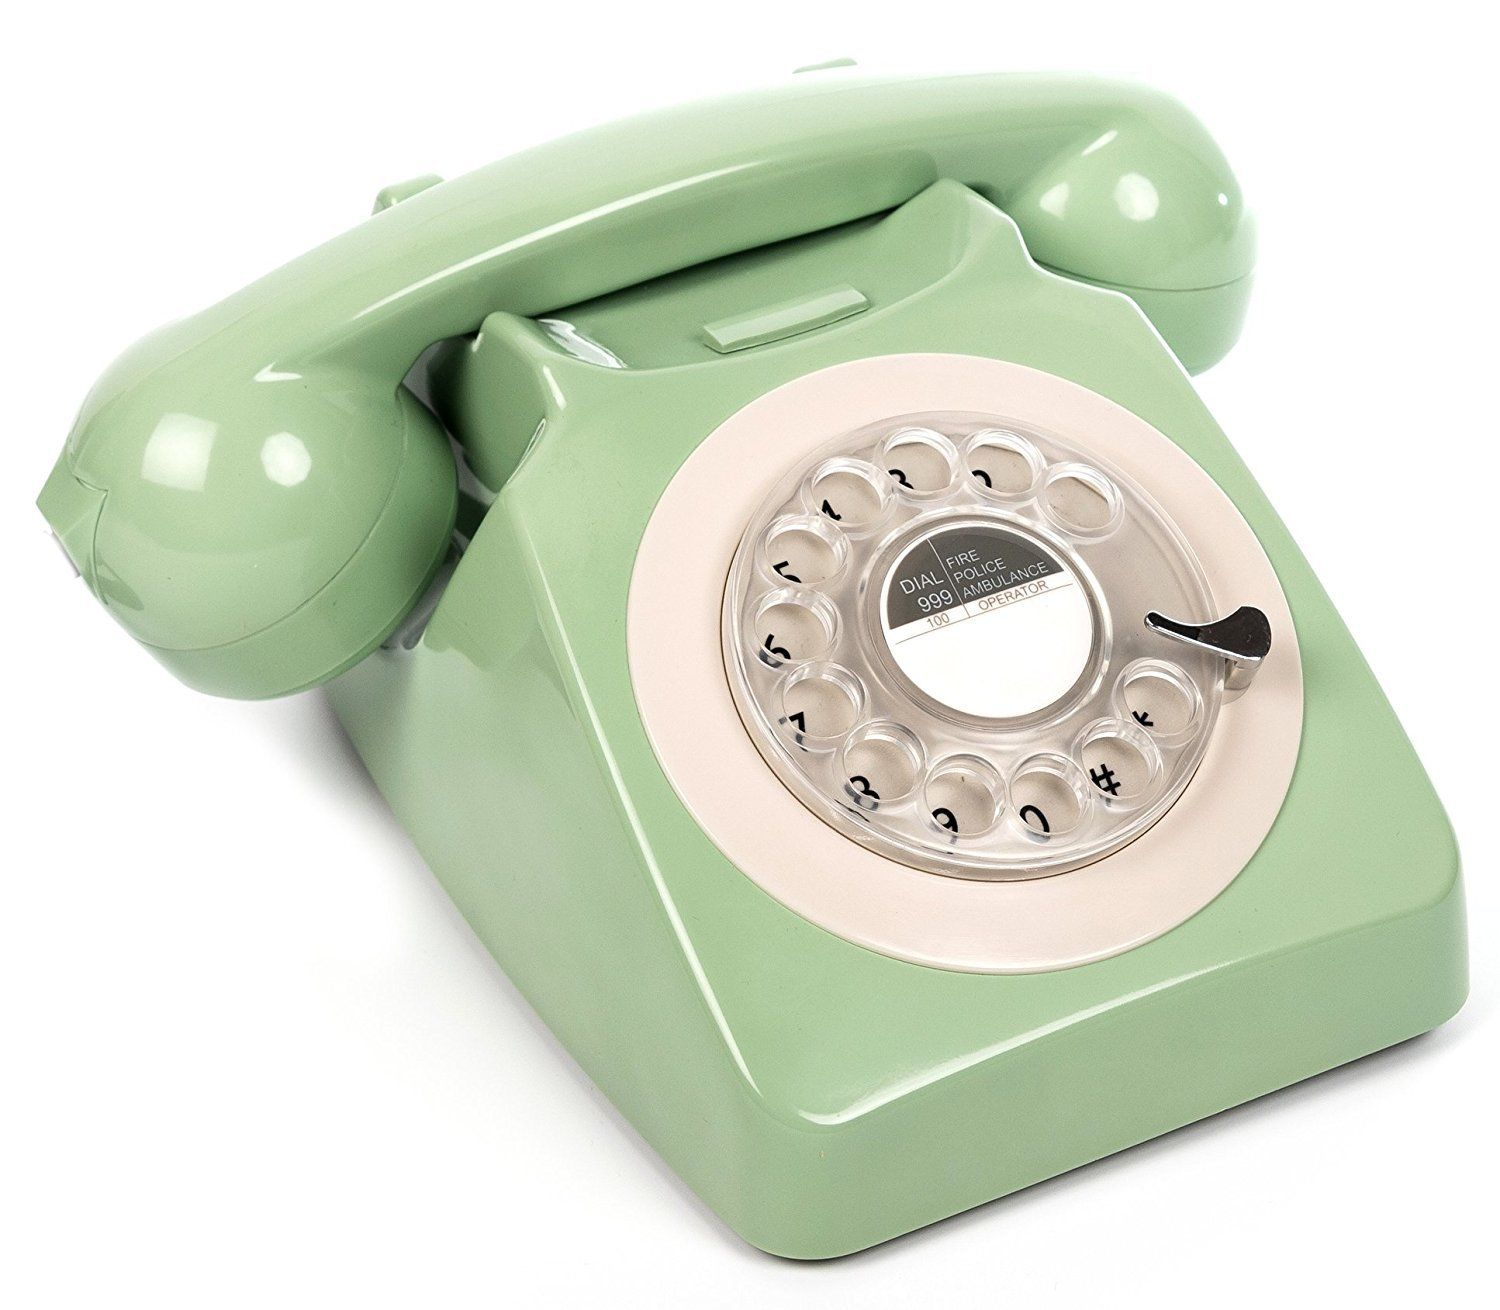 GPO RETRO 746 Retro-Drehscheiben-Telefon (grün) Telefon Kabelgebundenes